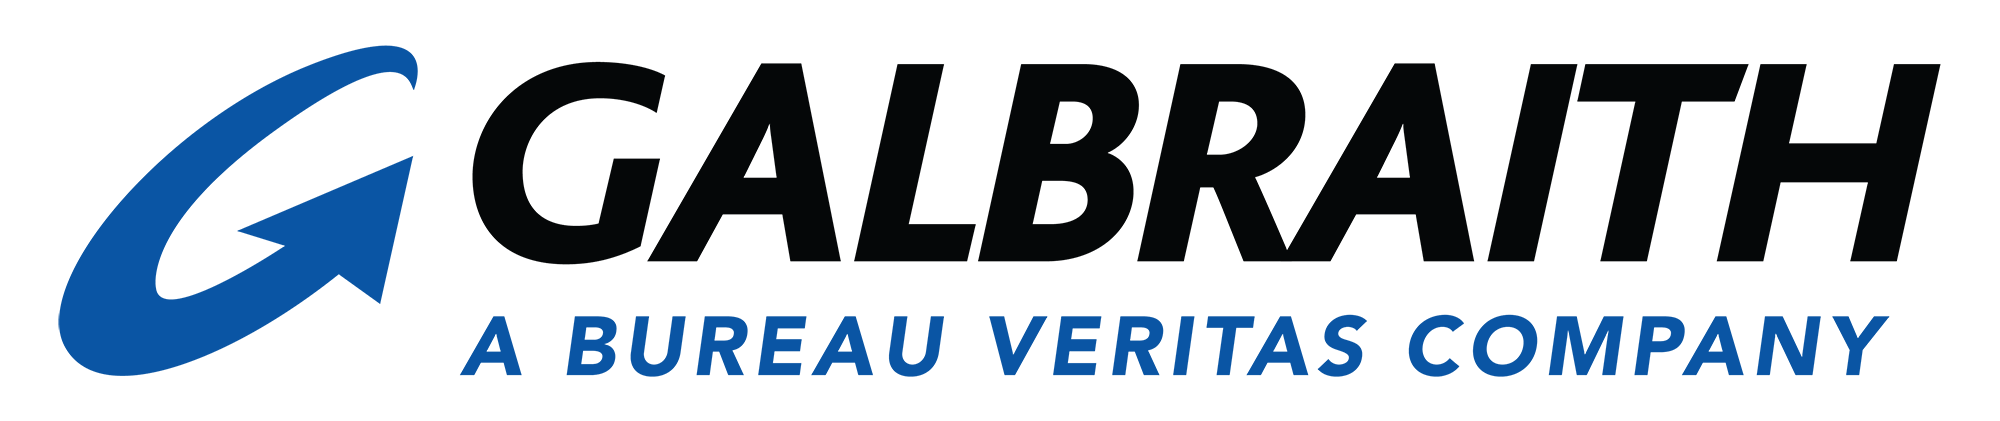 Galbraith Laboratories, Inc.